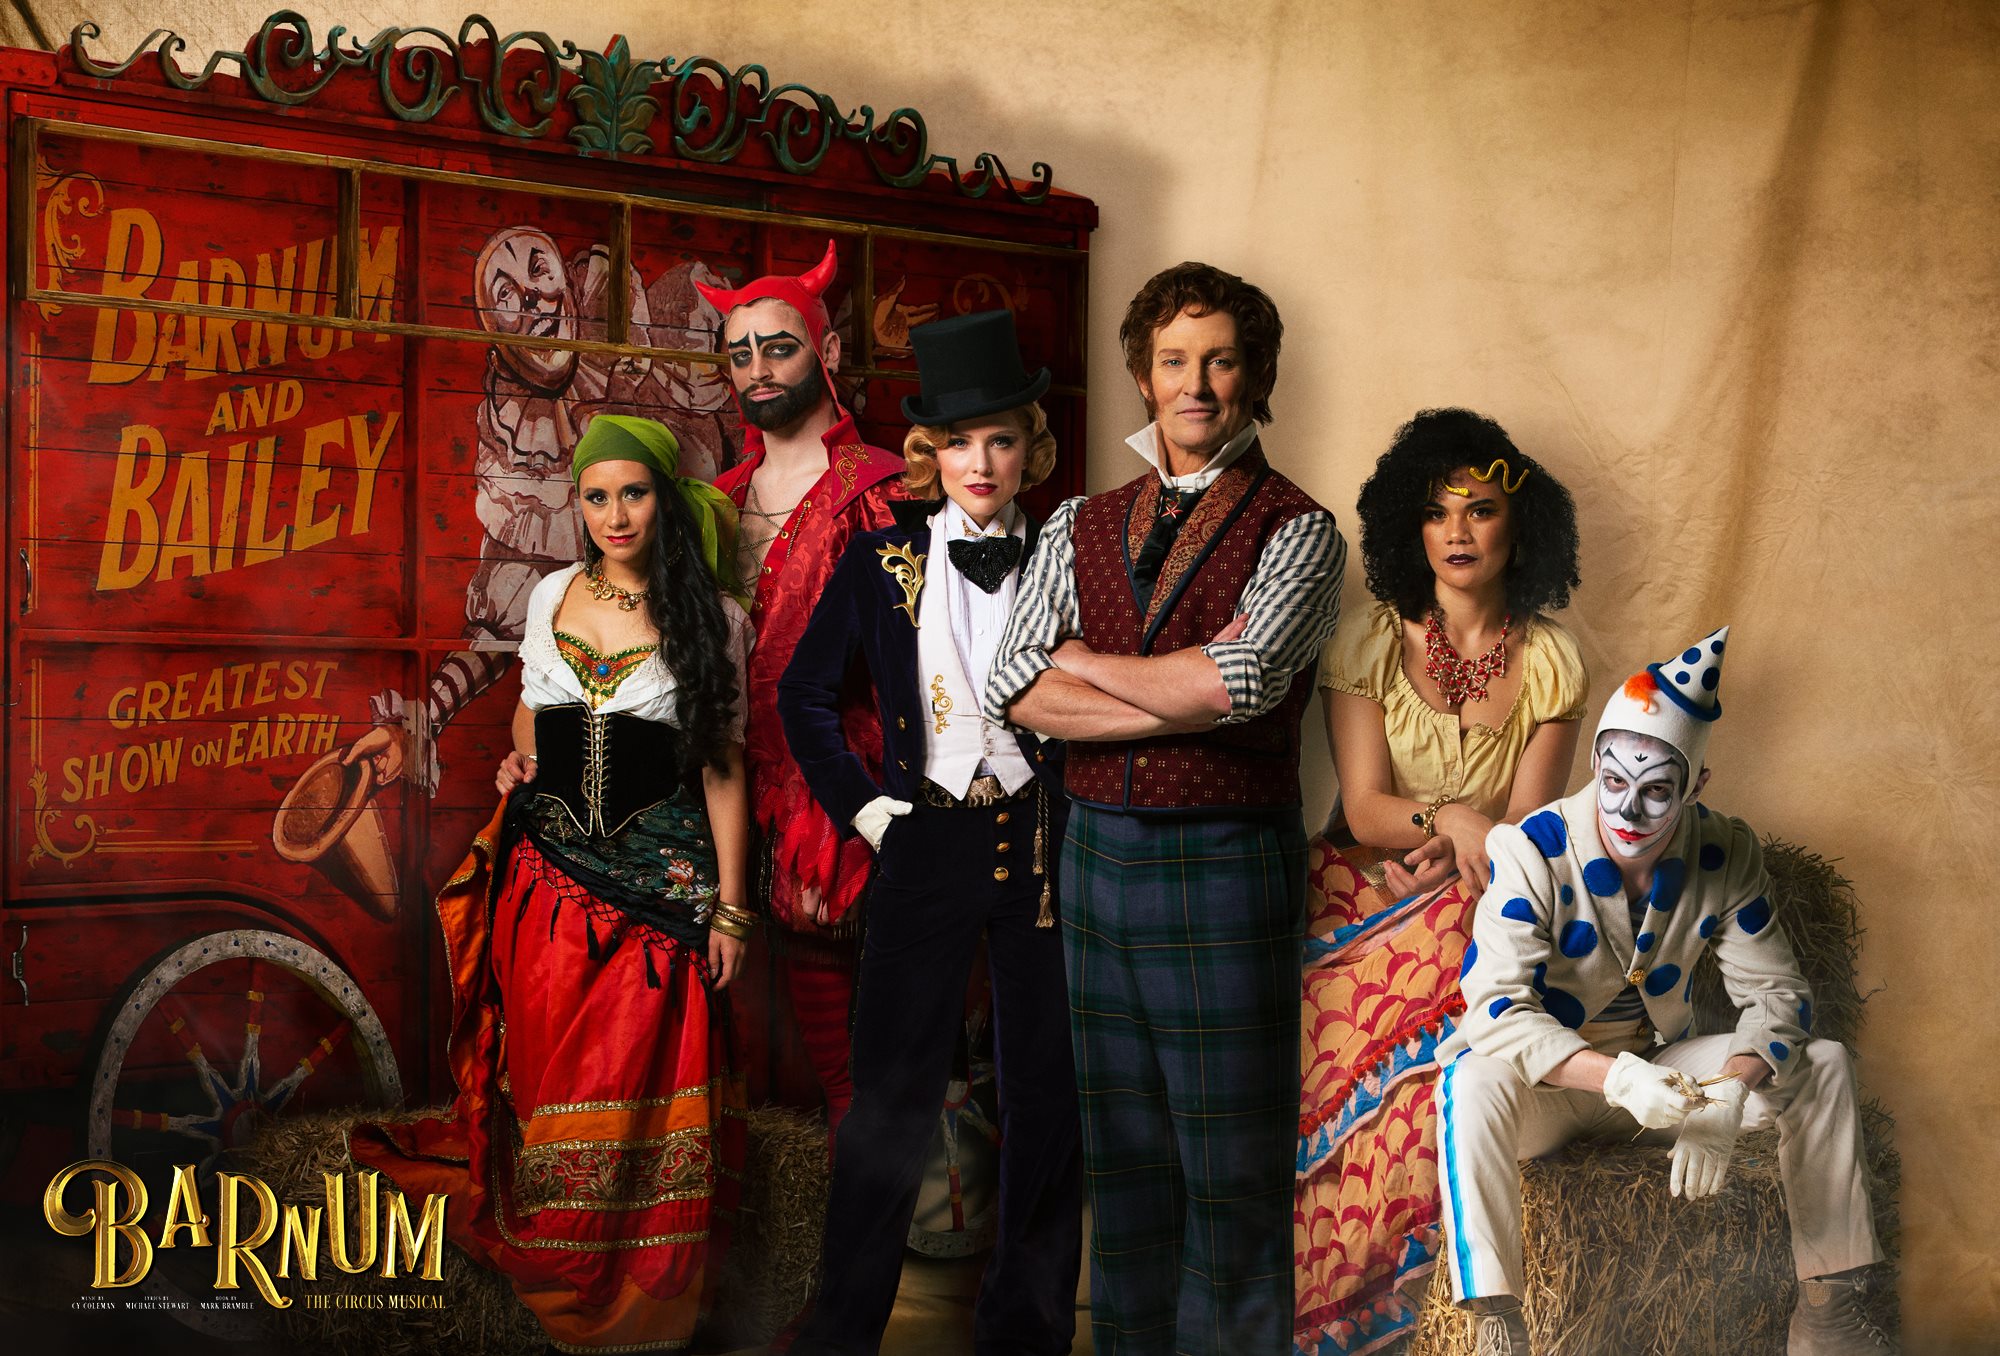 Barnum- Circus crew wagon